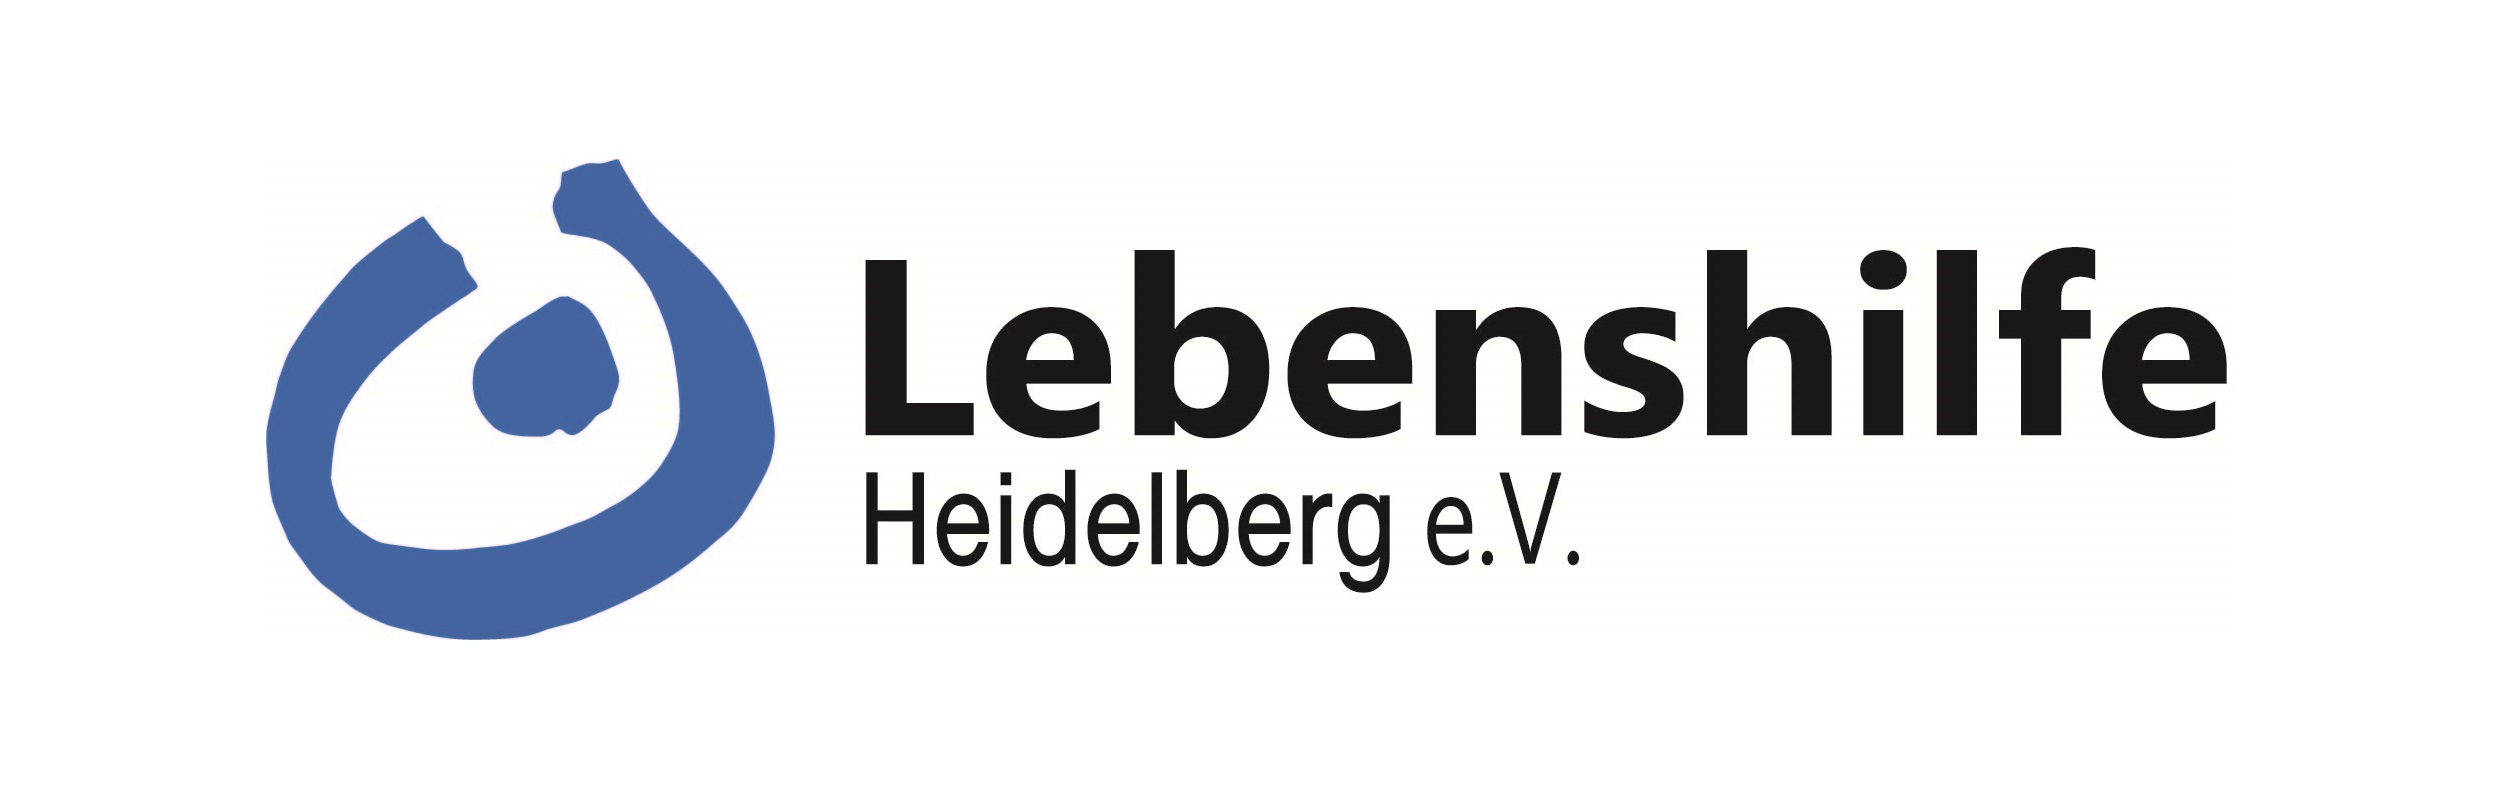 inklusive Jugendarbeit Heidelberg, Logo offene Lebenshilfe